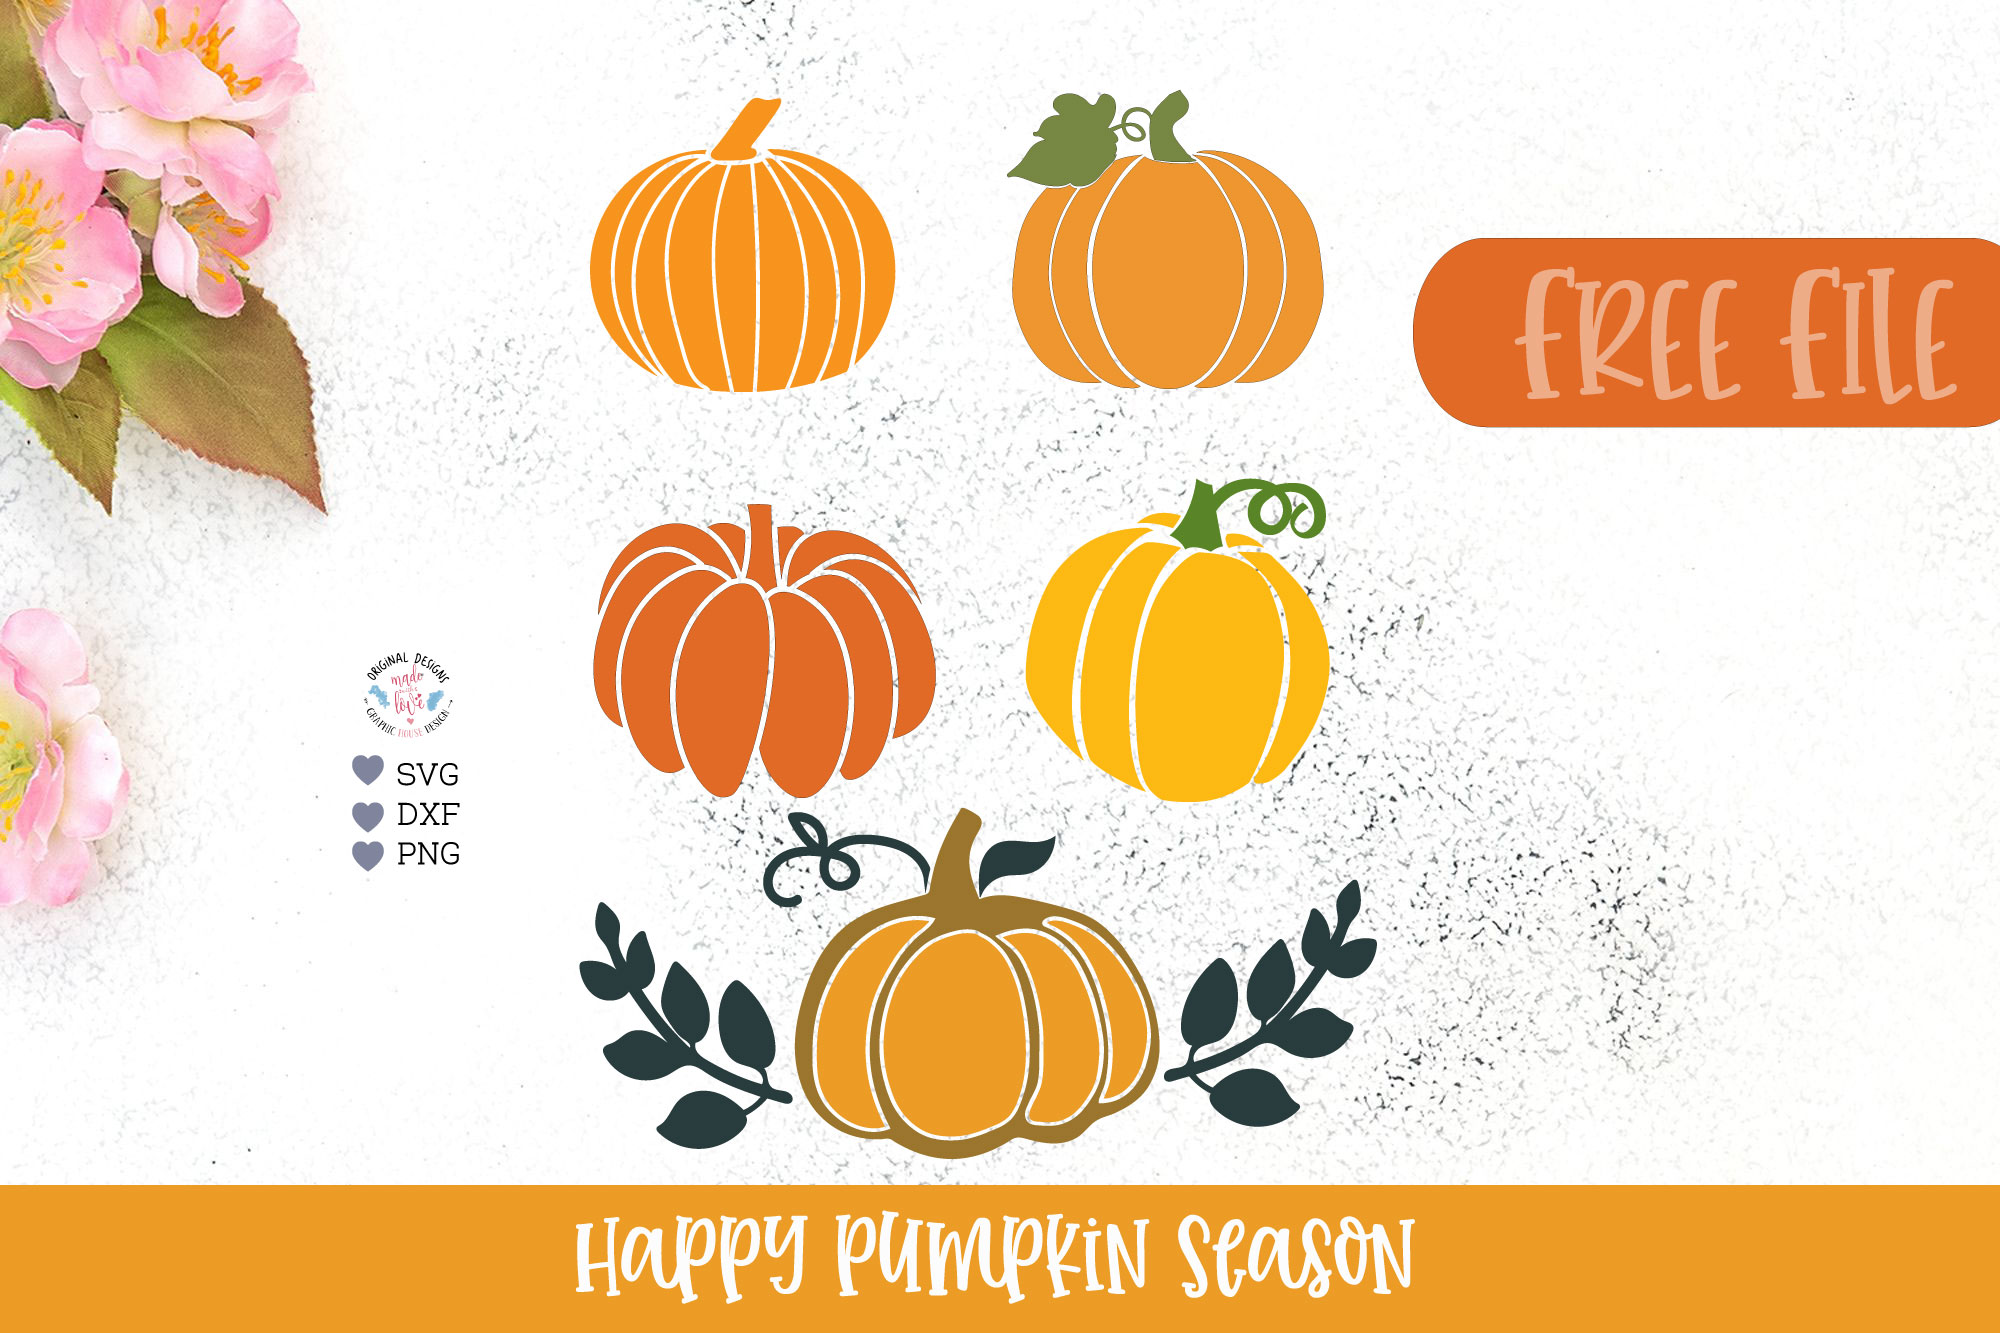 Happy Pumpkin Season with Free Pumpkins